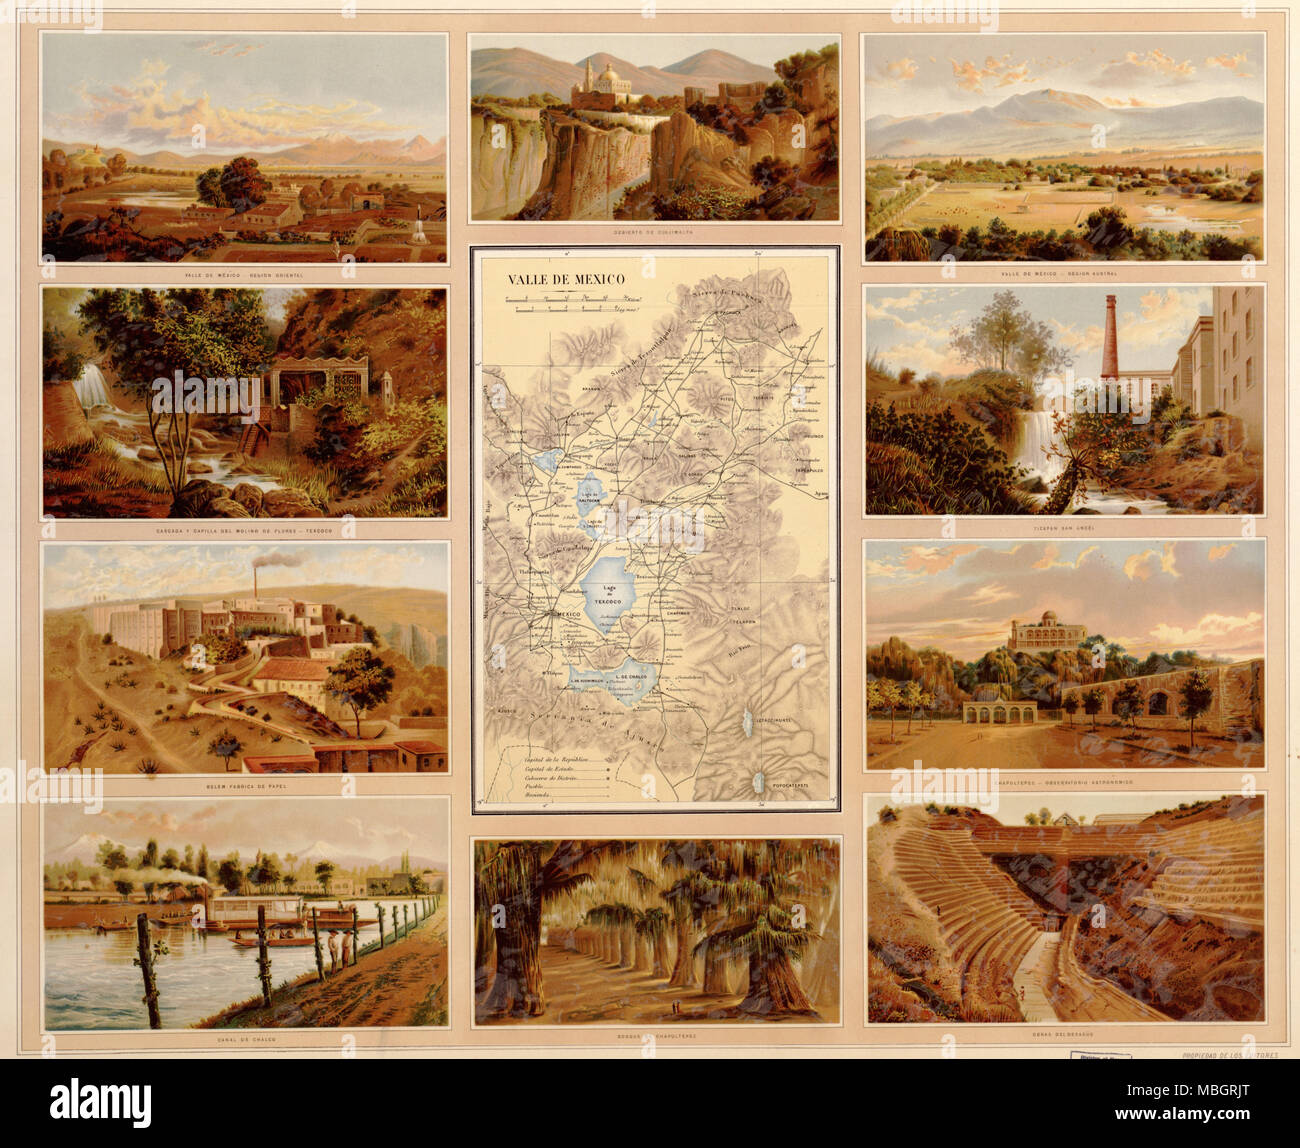 Valleys of Mexico - 1885 Stock Photo